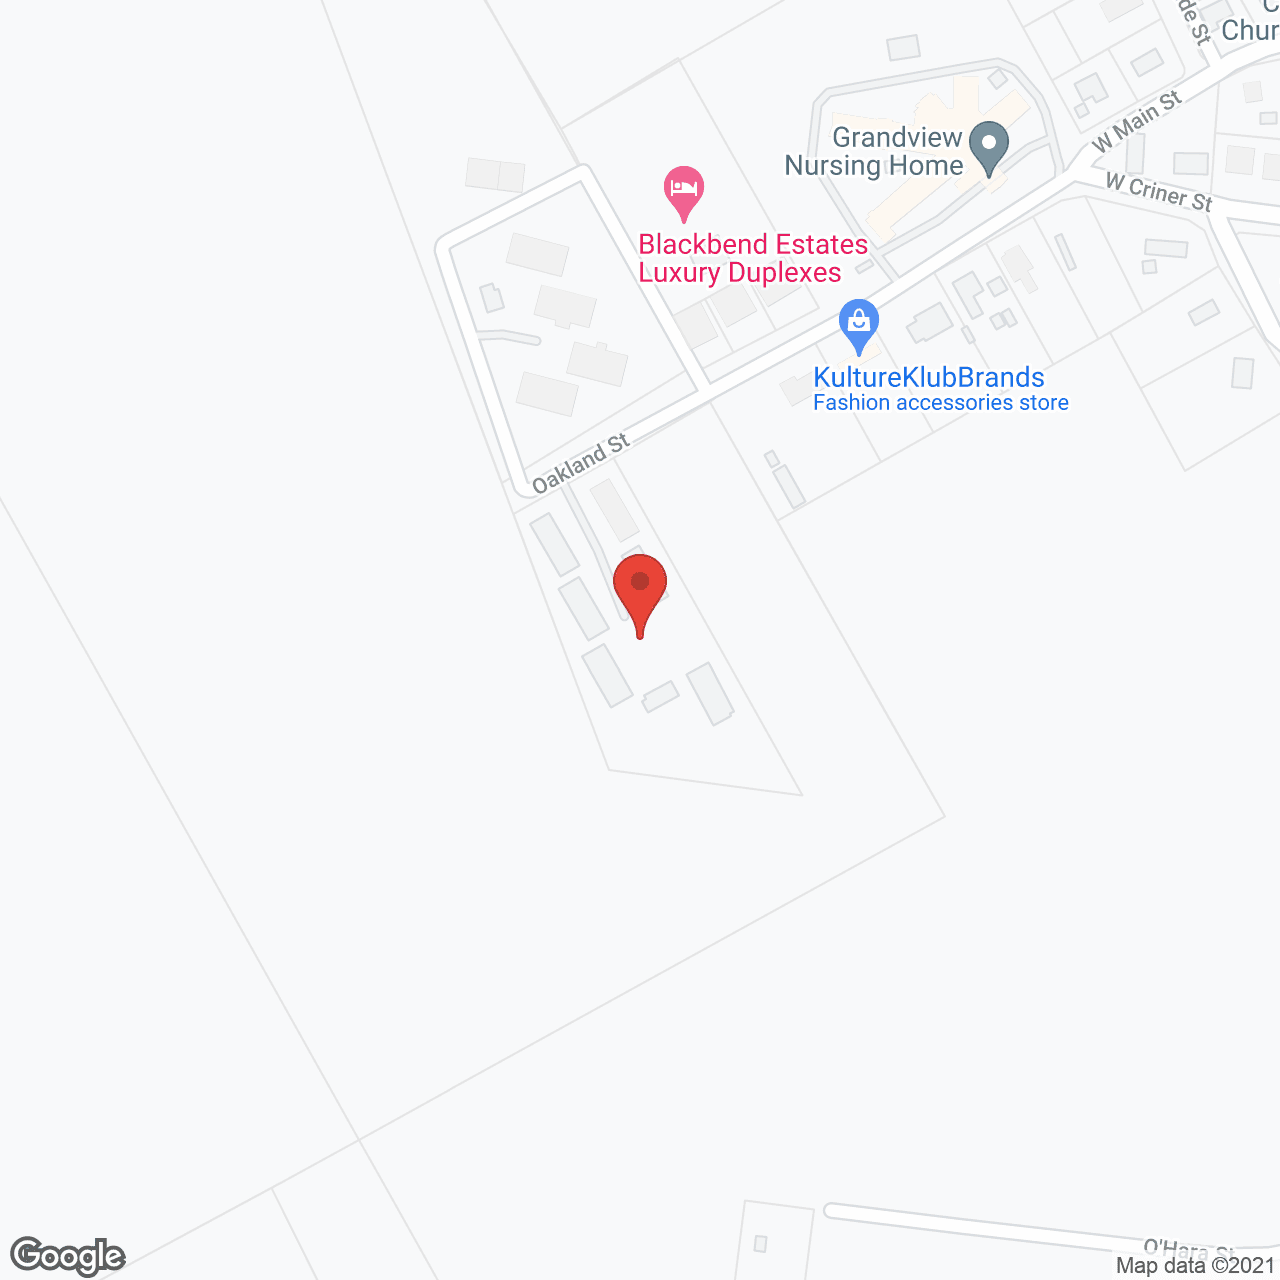 Grandview Retirement Village in google map